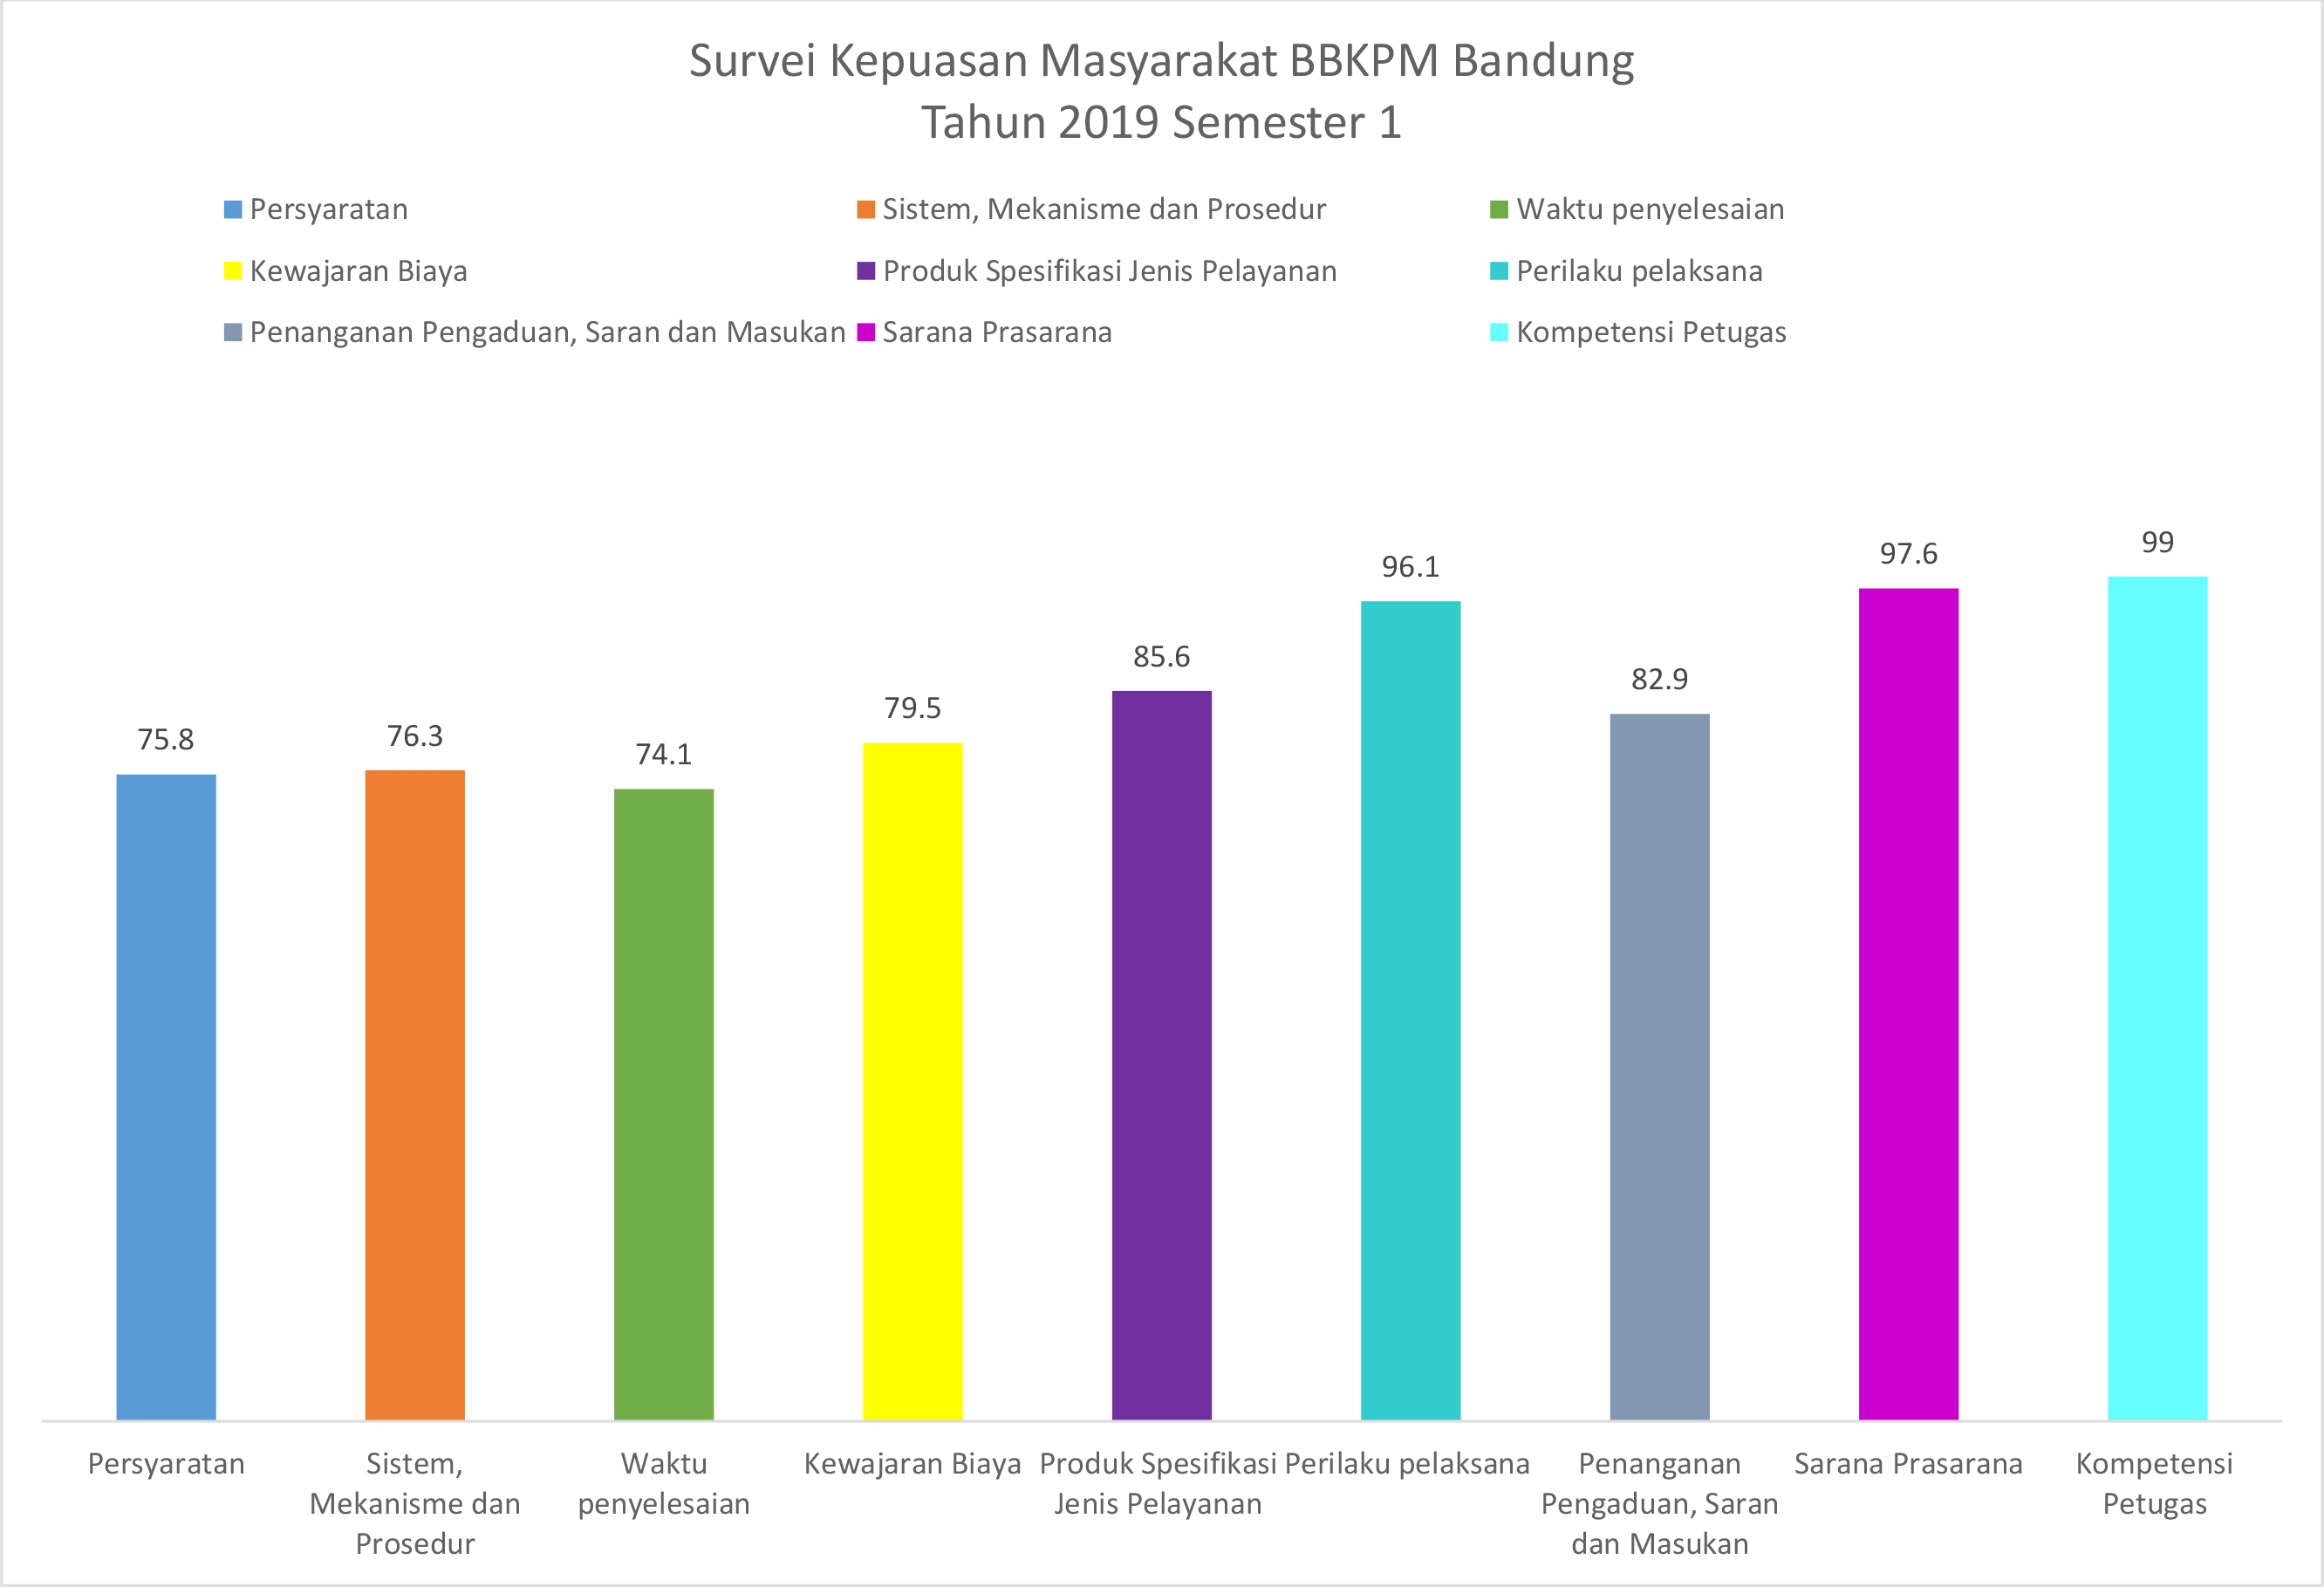 HASIL SURVEY KEPUASAN MASYARAKAT/BBKPM-BANDUNG 2019 SMTR 1